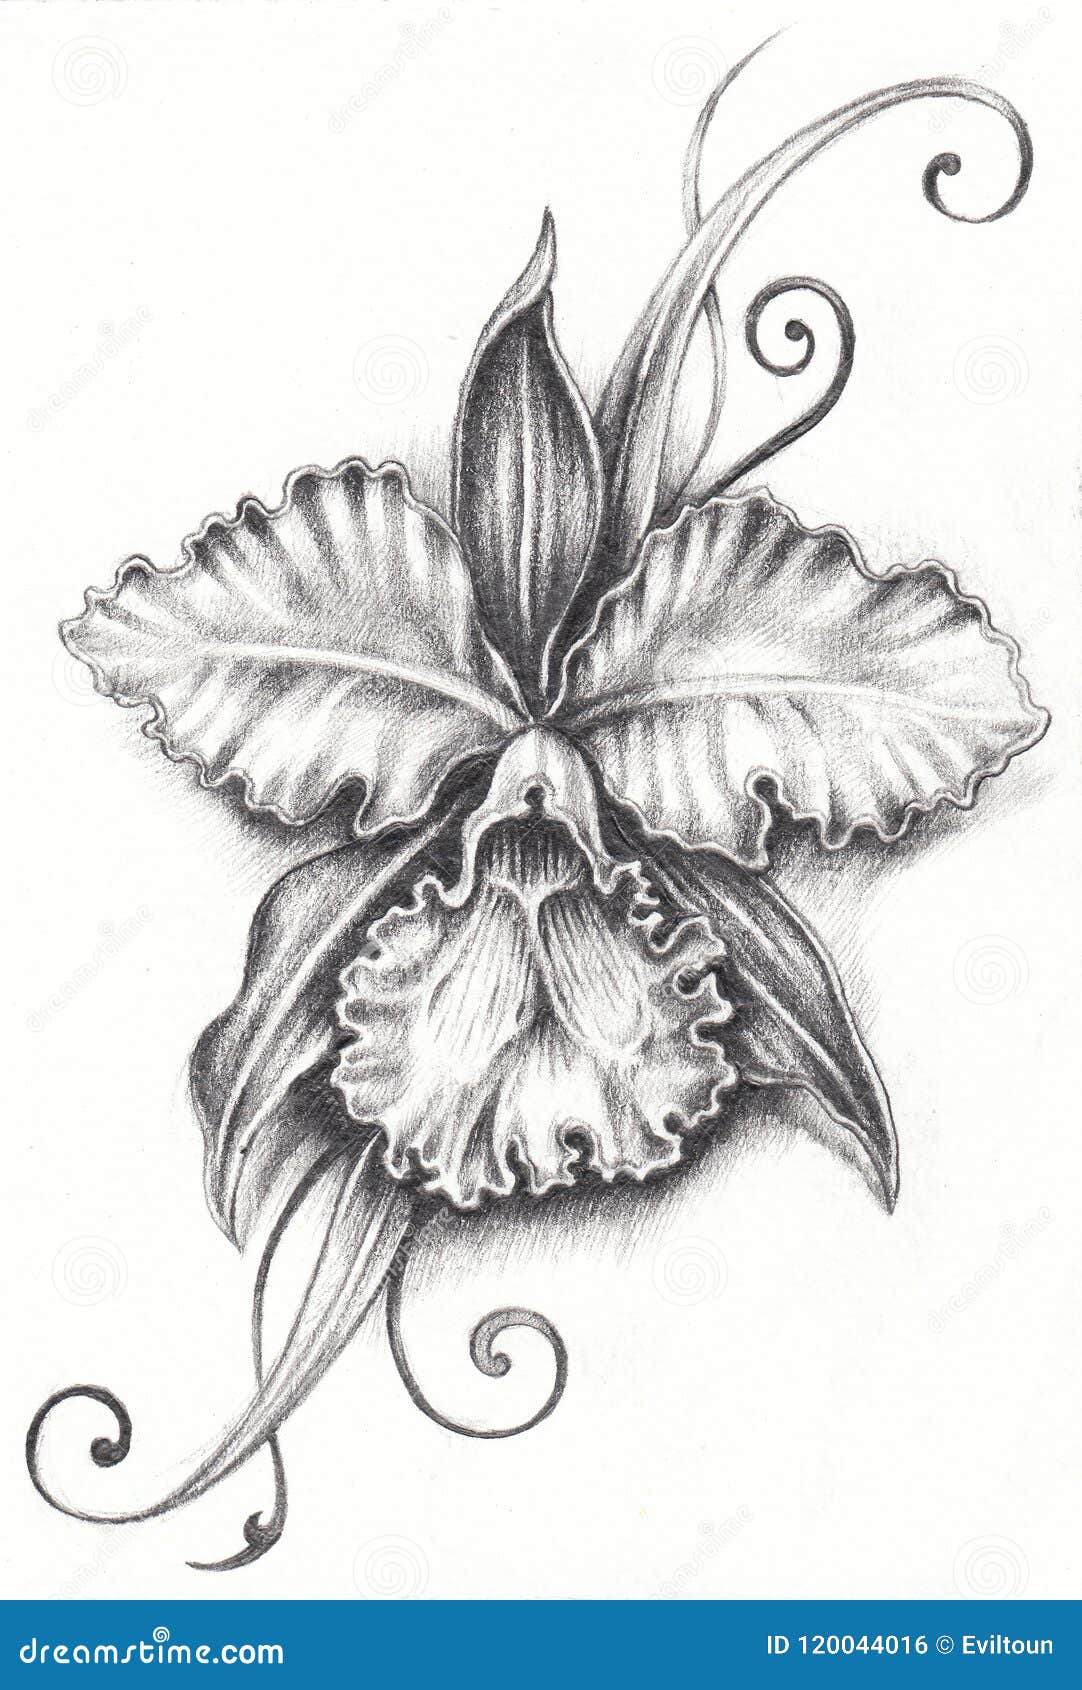 Cattleya tattoo designs